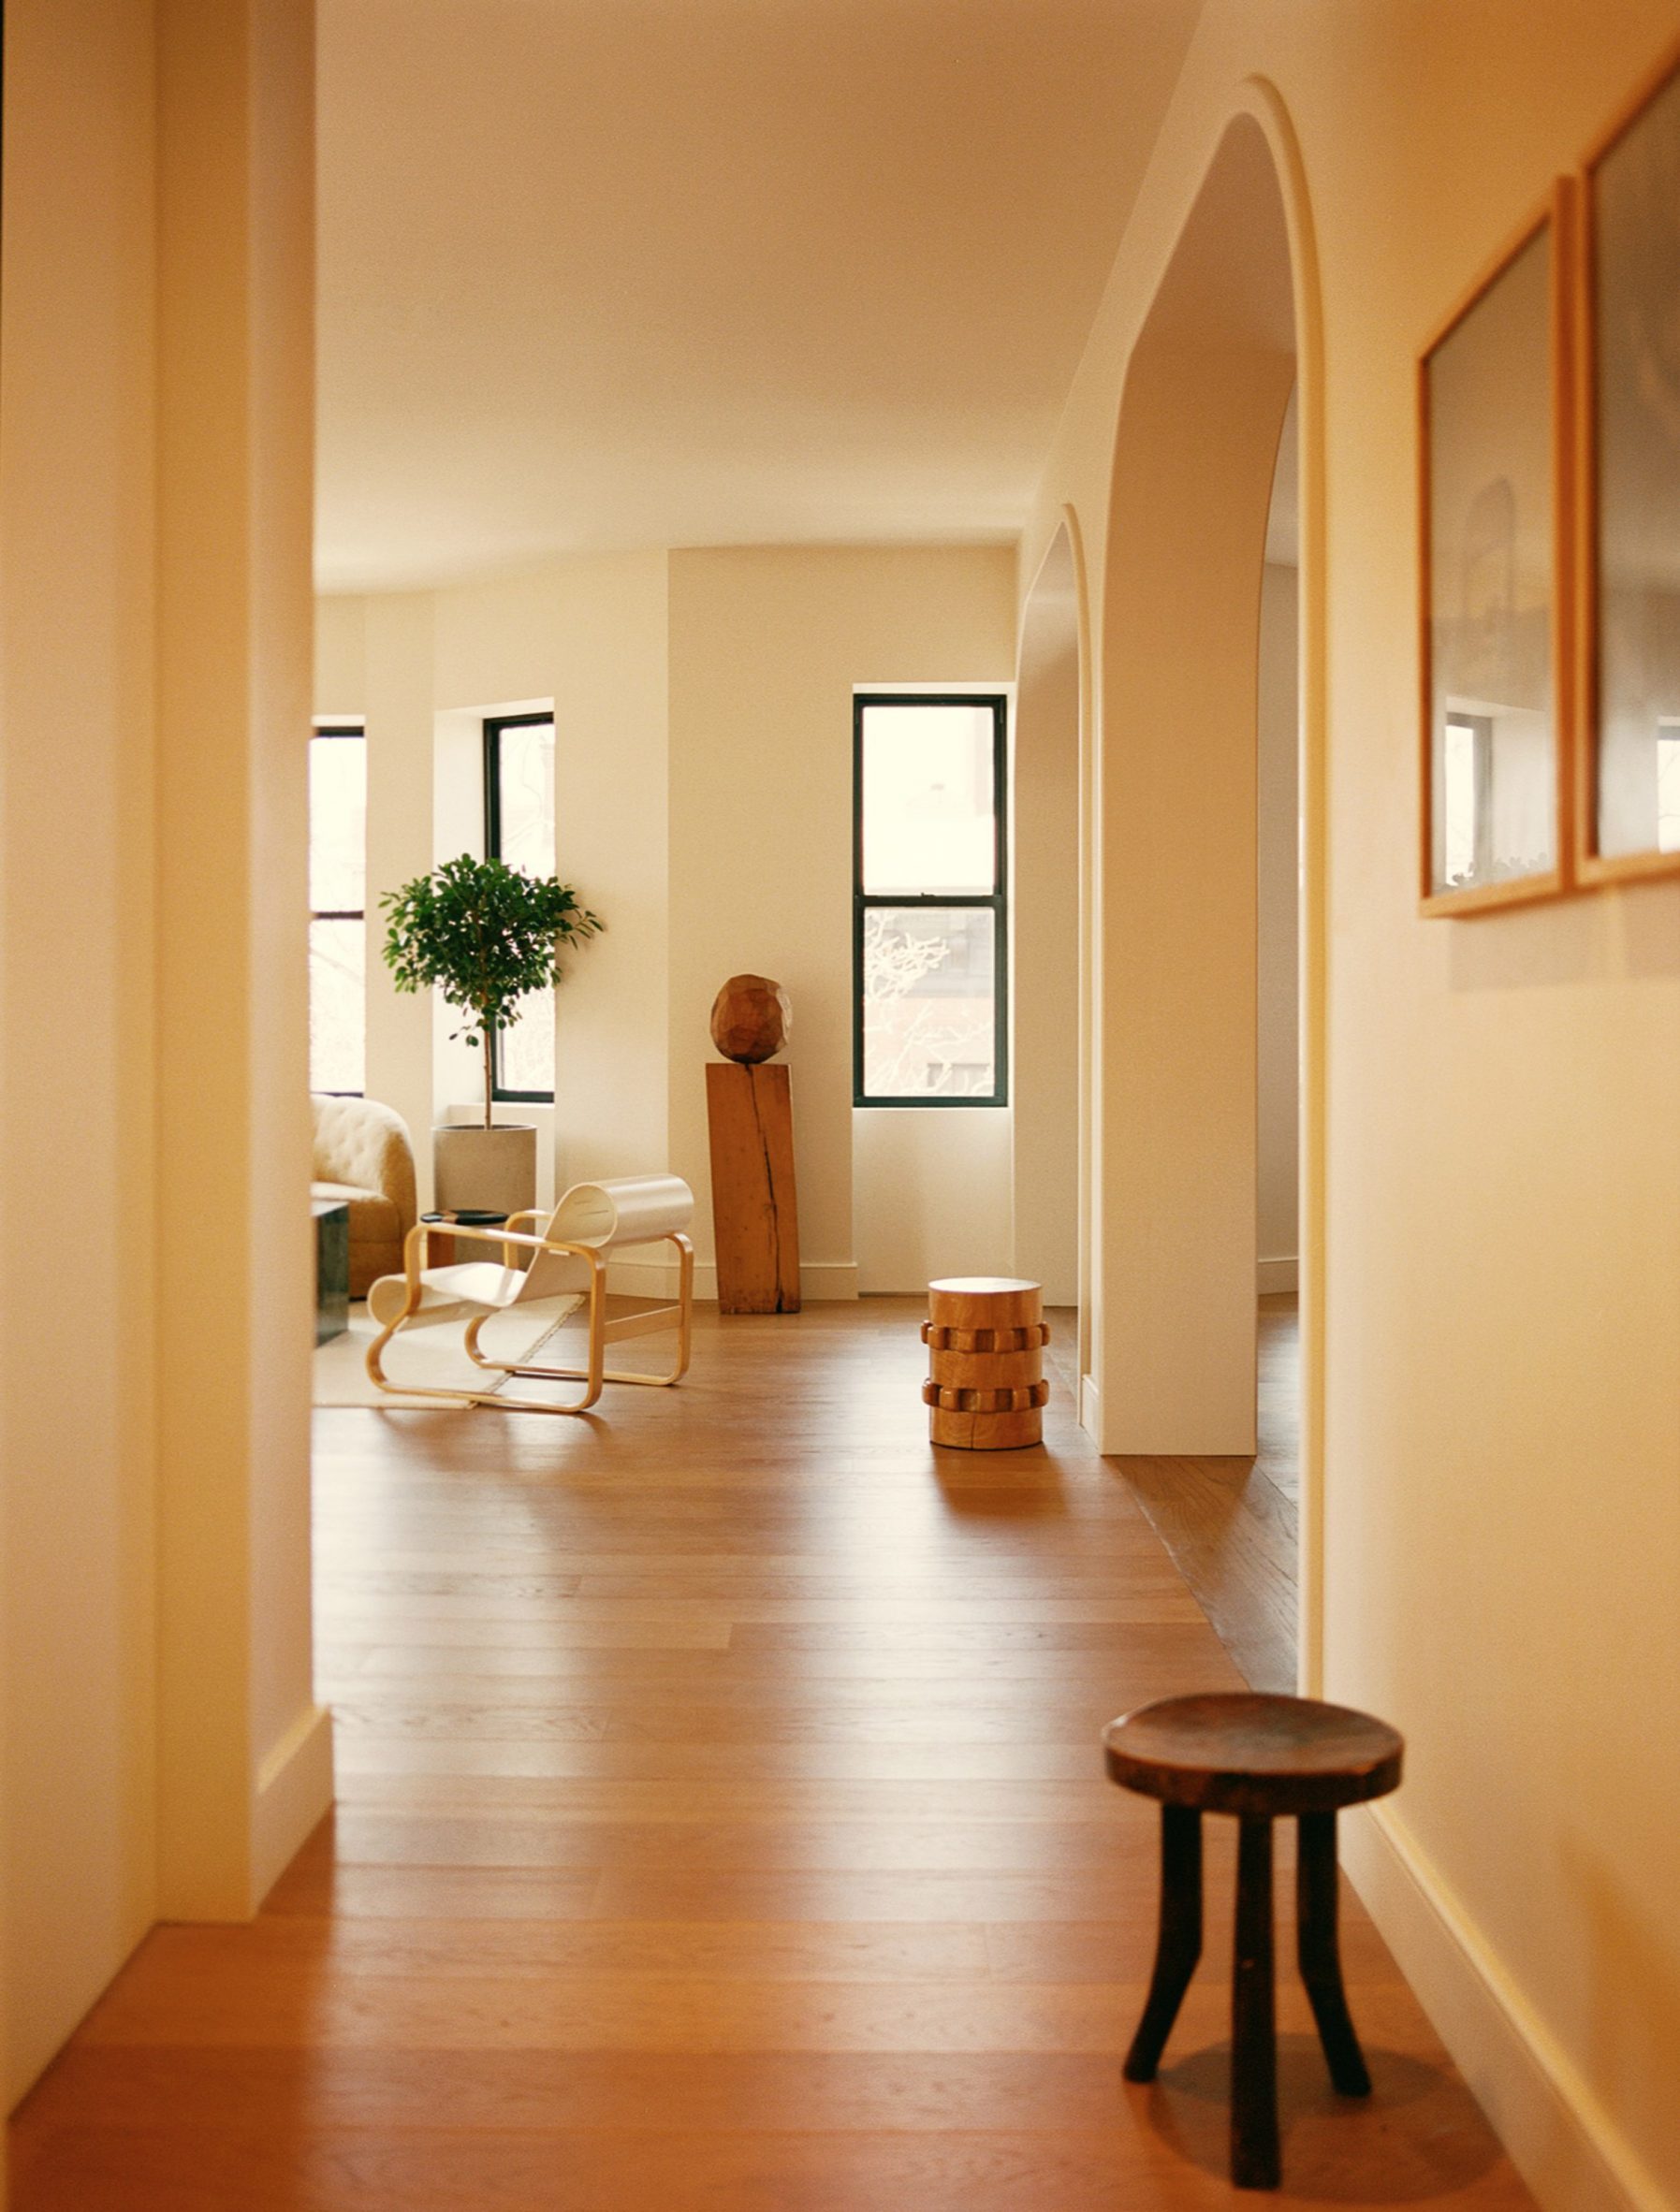 A warm hallway interior of an apartment